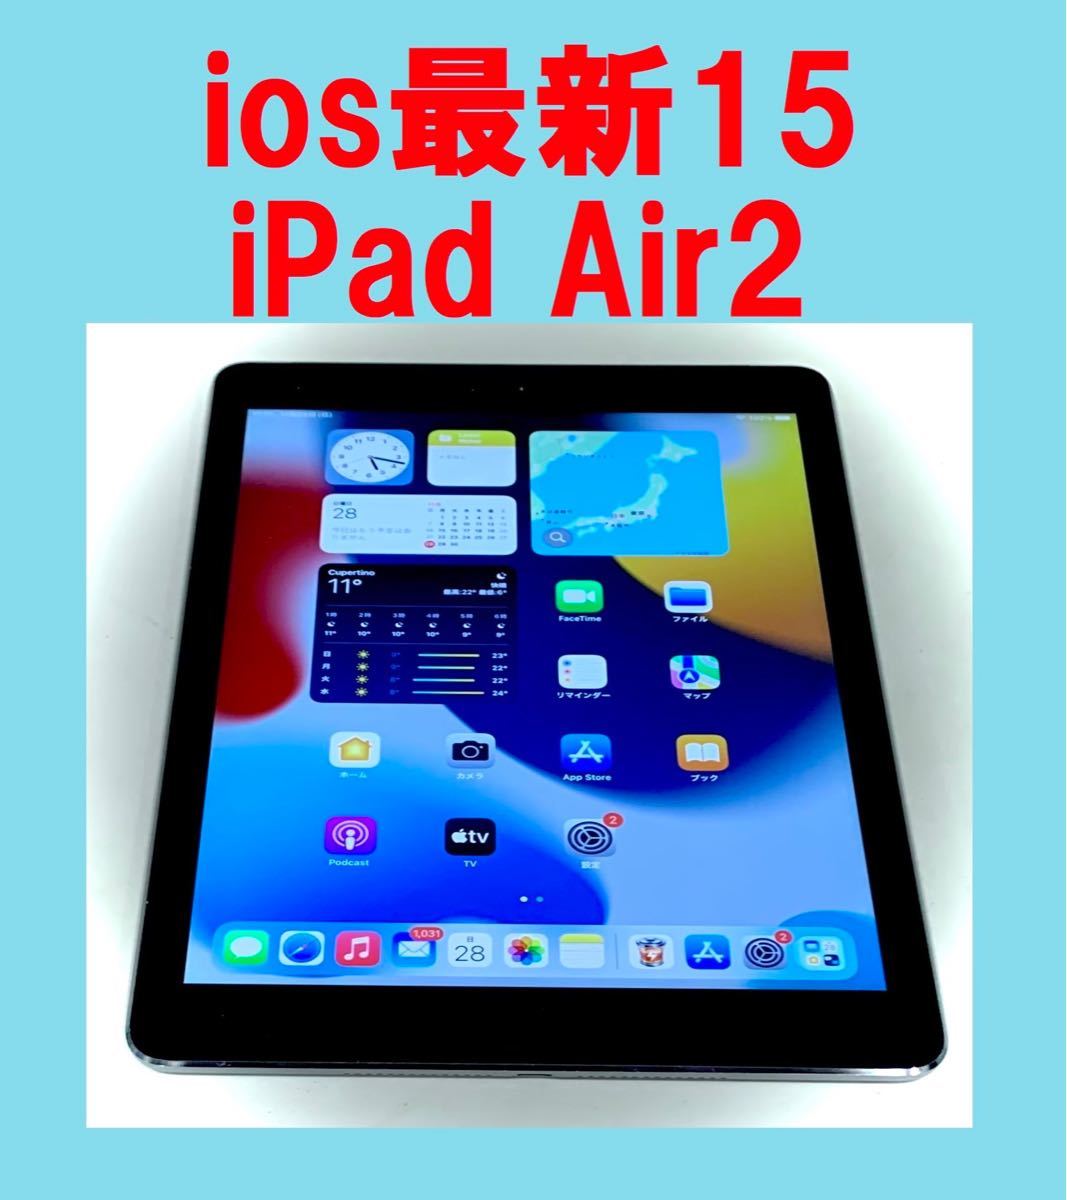 iPad air 2 グレー Apple タブレット iPad Air WiFi Cellular Wi-Fi